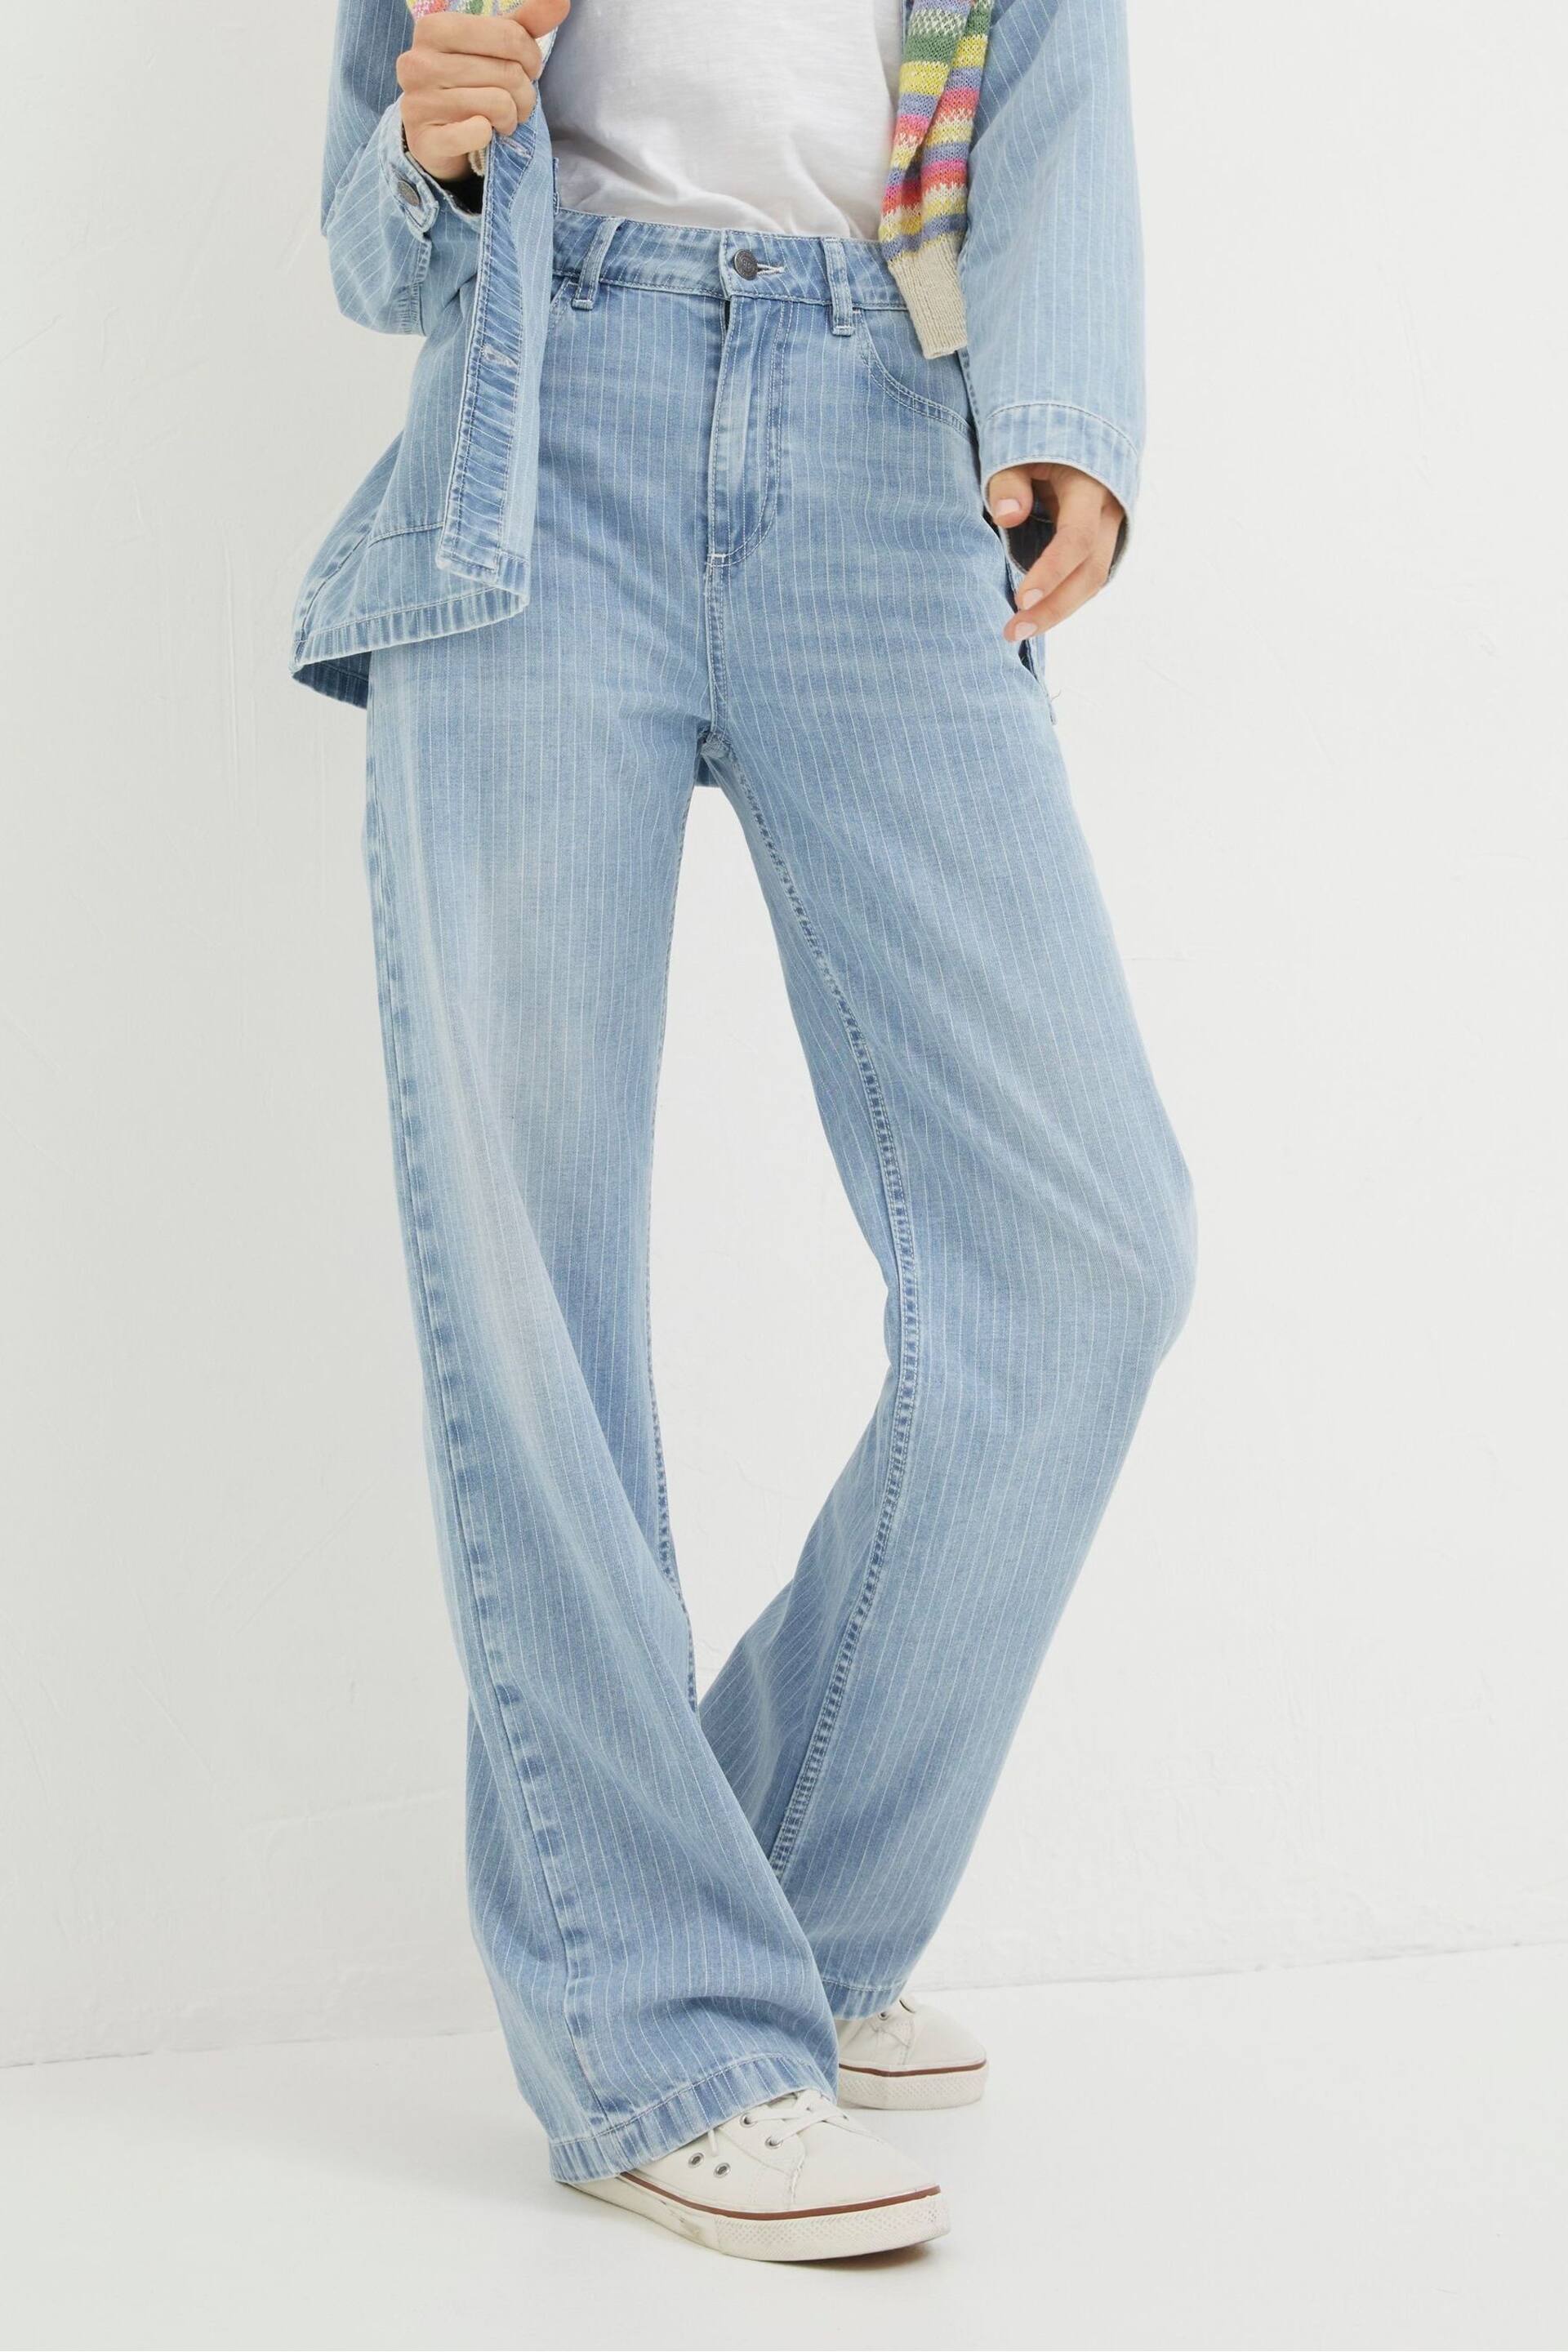 FatFace Blue Blue Salle Stripe Jeans - Image 1 of 6